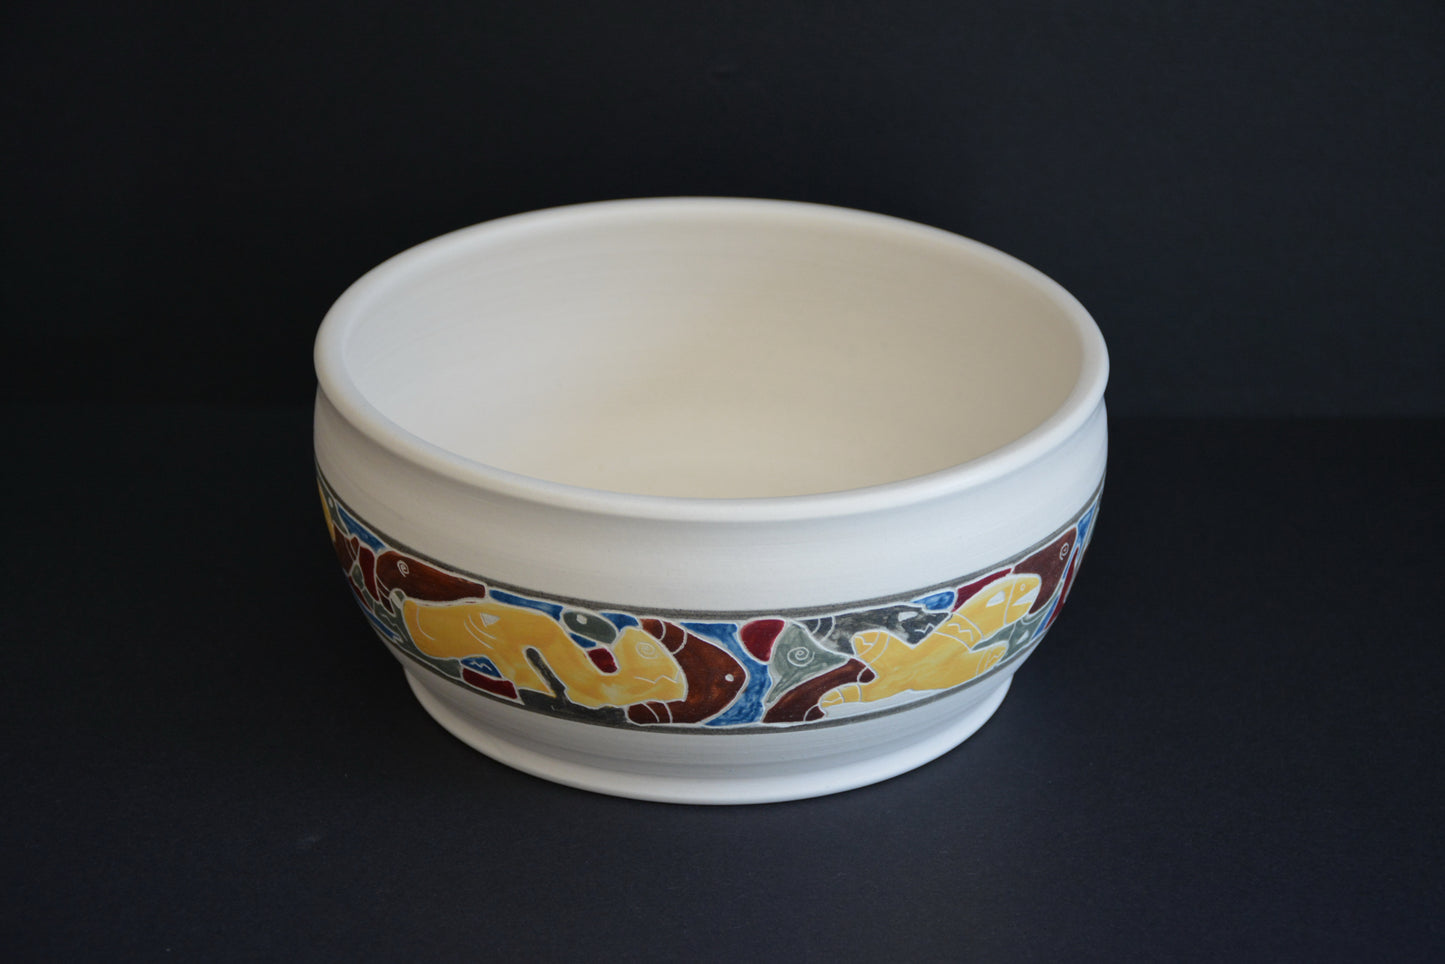 BL-29 Decorative Ceramic Candy Box - Porcelain Candy Box